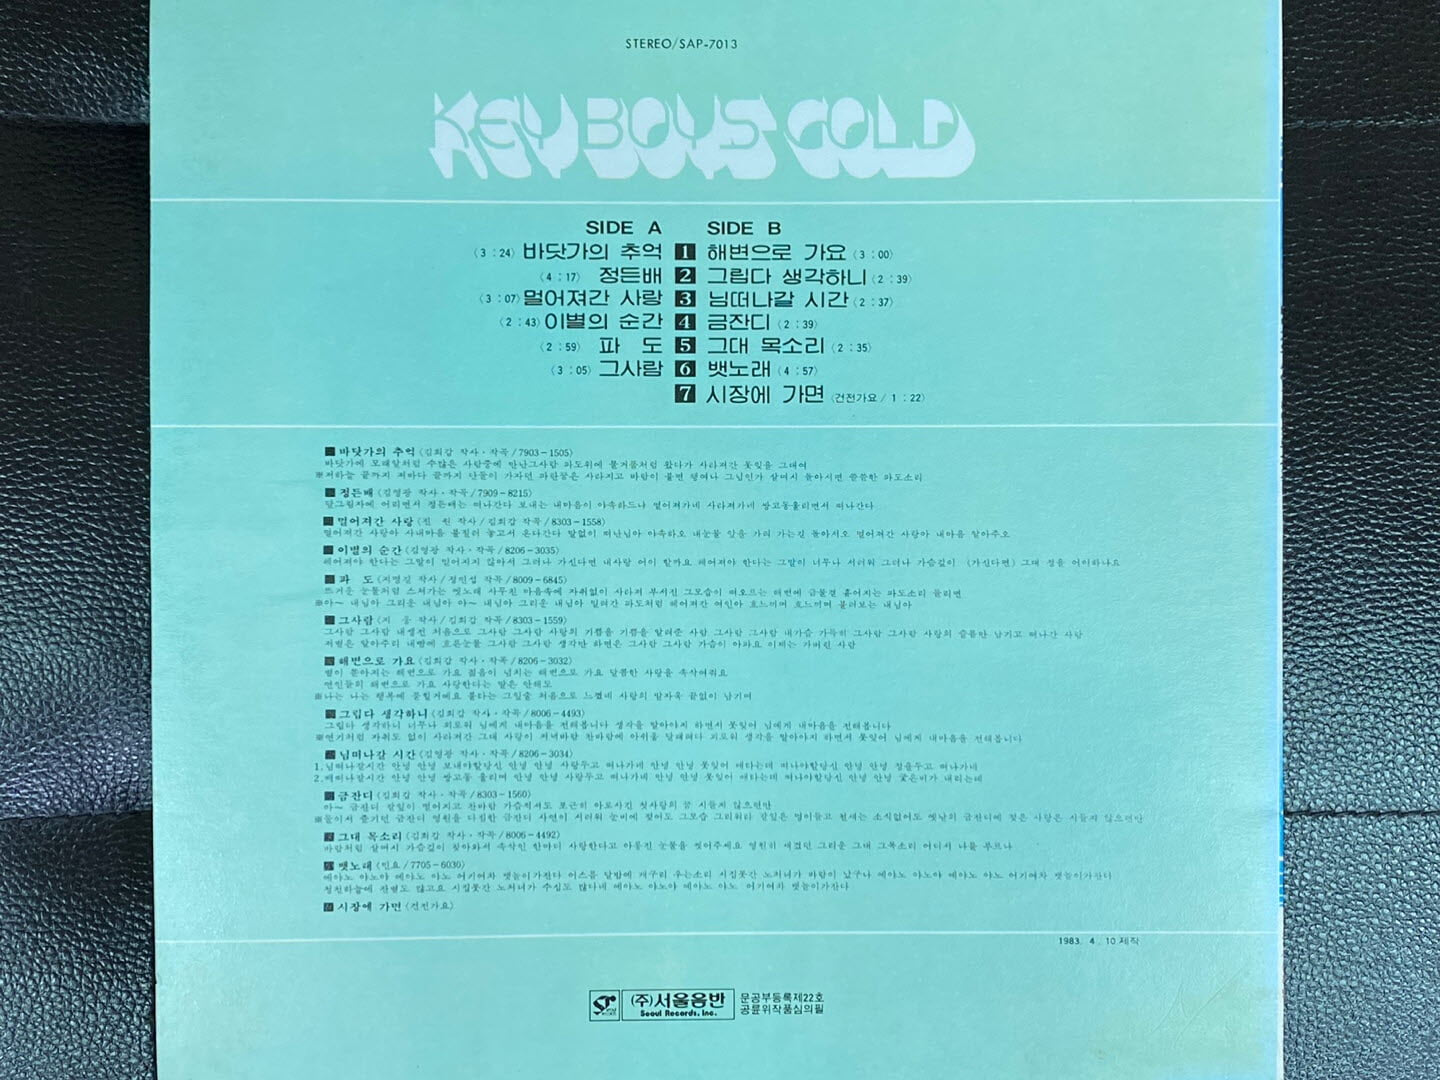 [LP] 키보이스 (Key Boys) - Key Boys Gold (바닷가의 추억,해변으로 가요) LP [서울음반 SAP-7013]